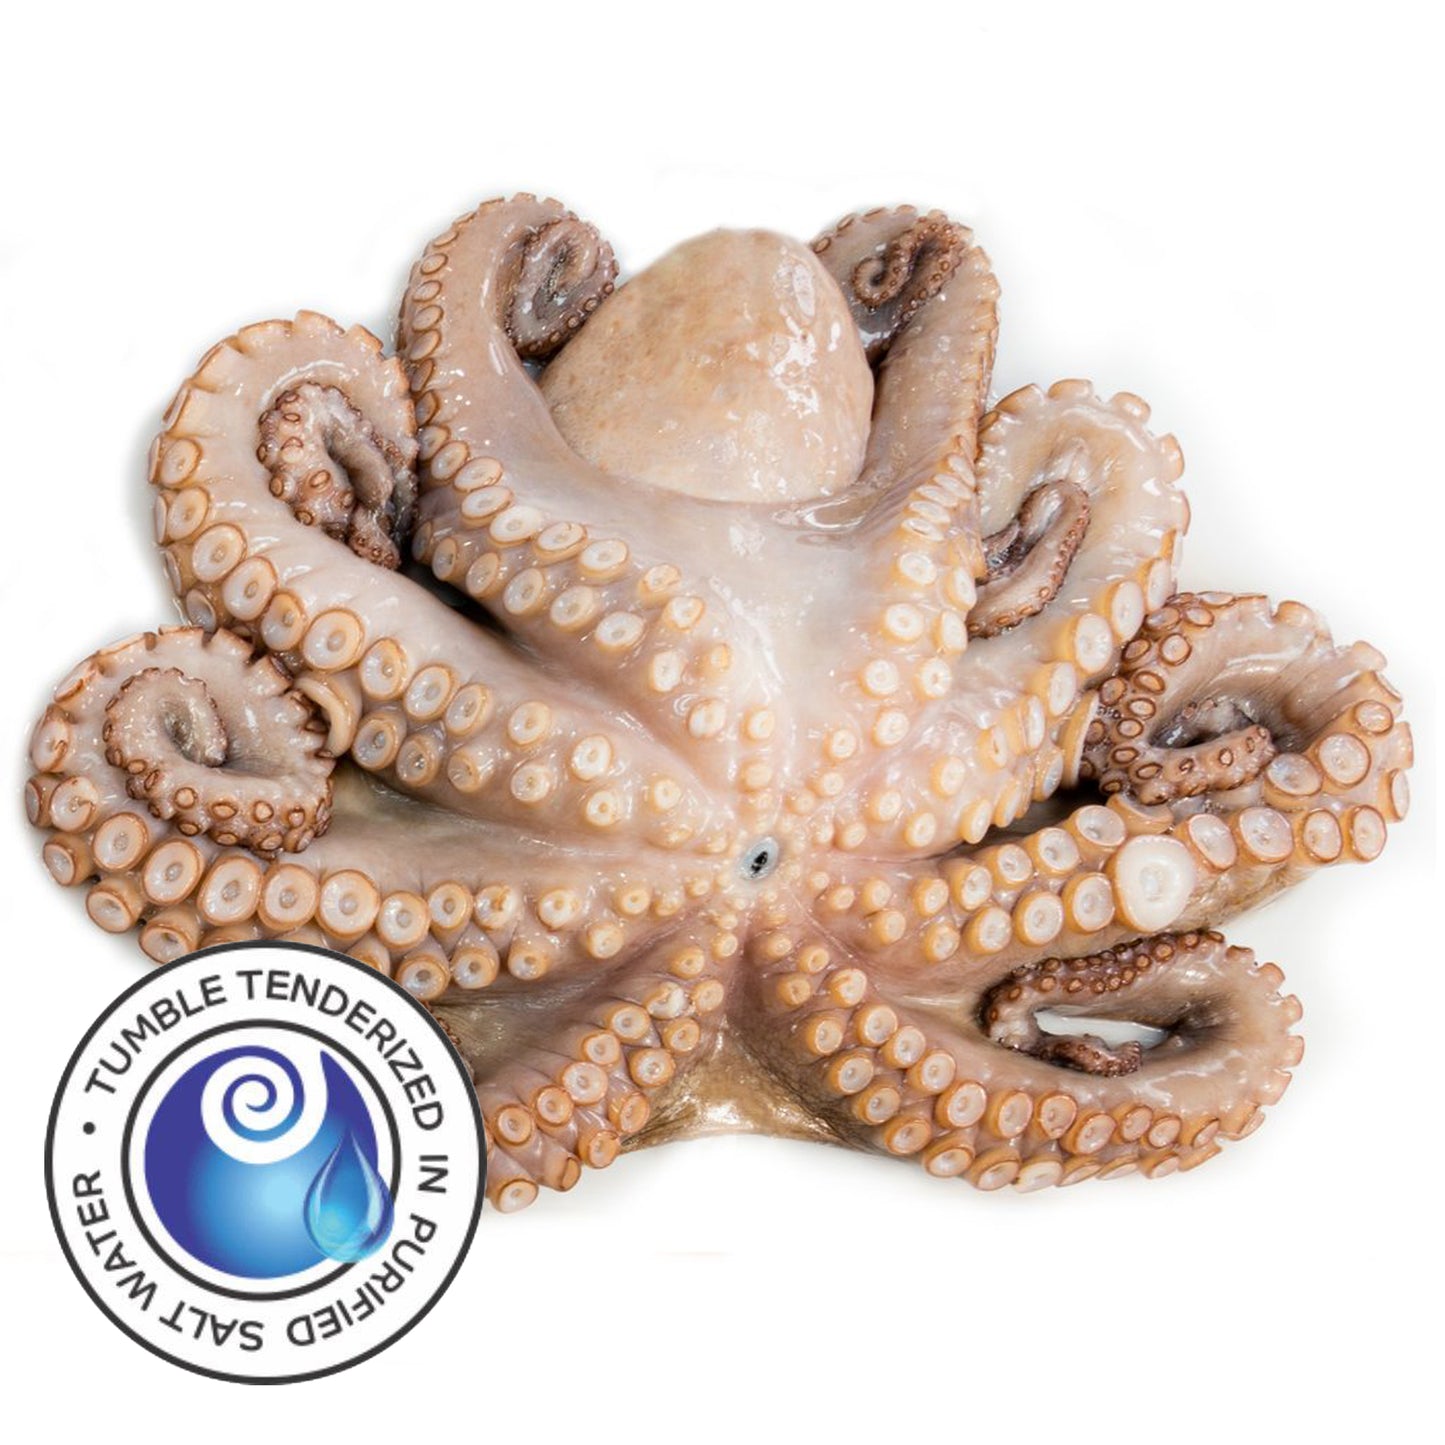 Tenderized Wild Octopus 6-8 lbs (T2)